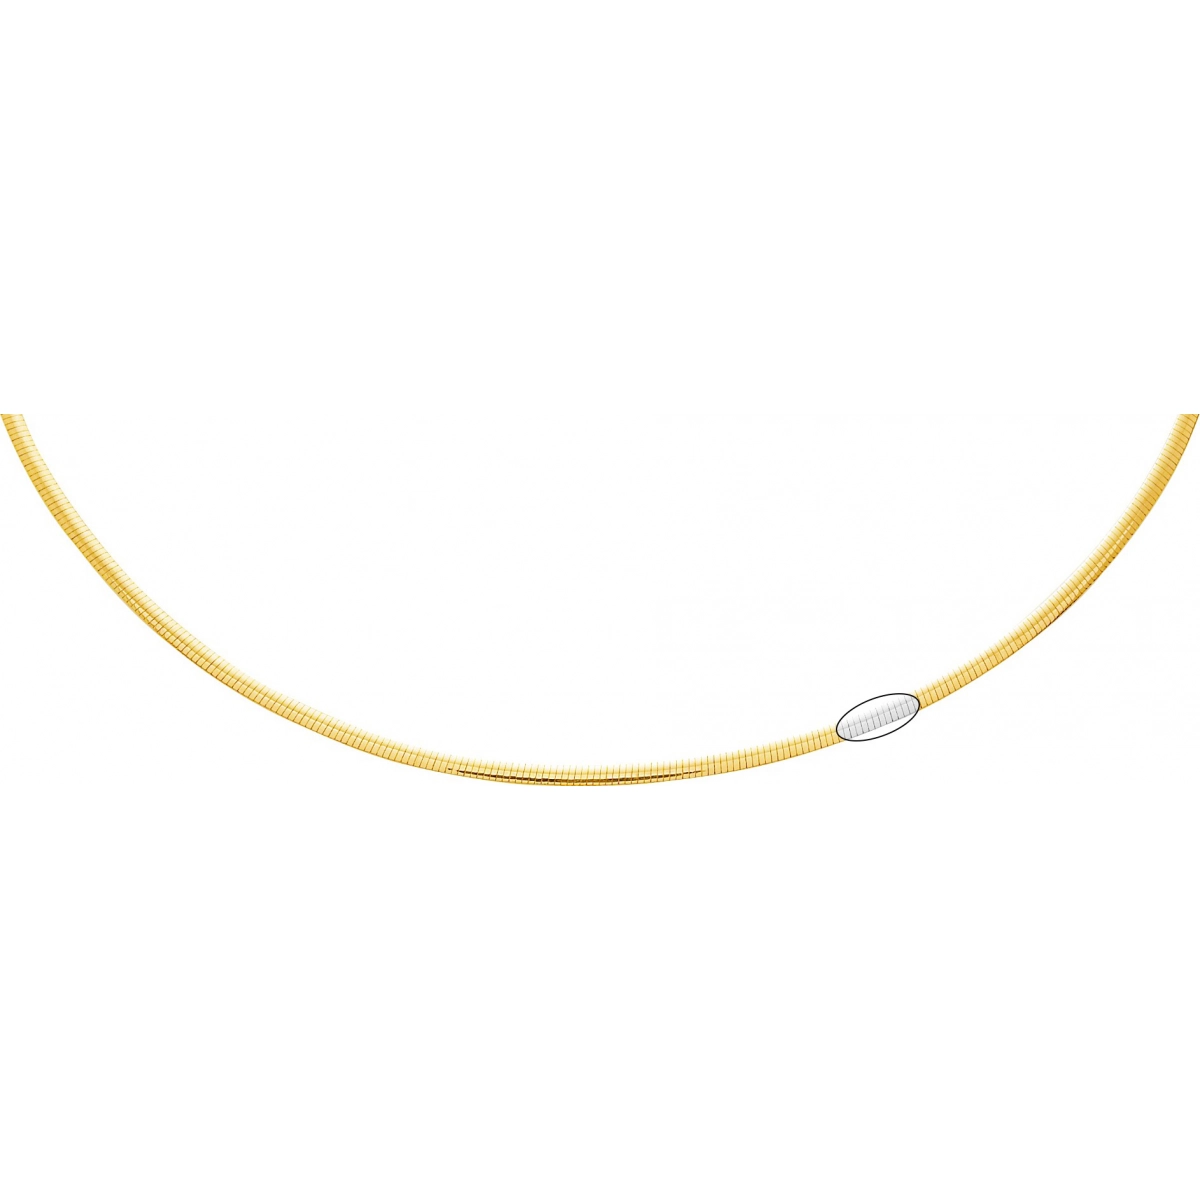 Necklace chain 'Avvolto' reversible 18K 2TG - Size: 45  Lua Blanca  2263.4.45